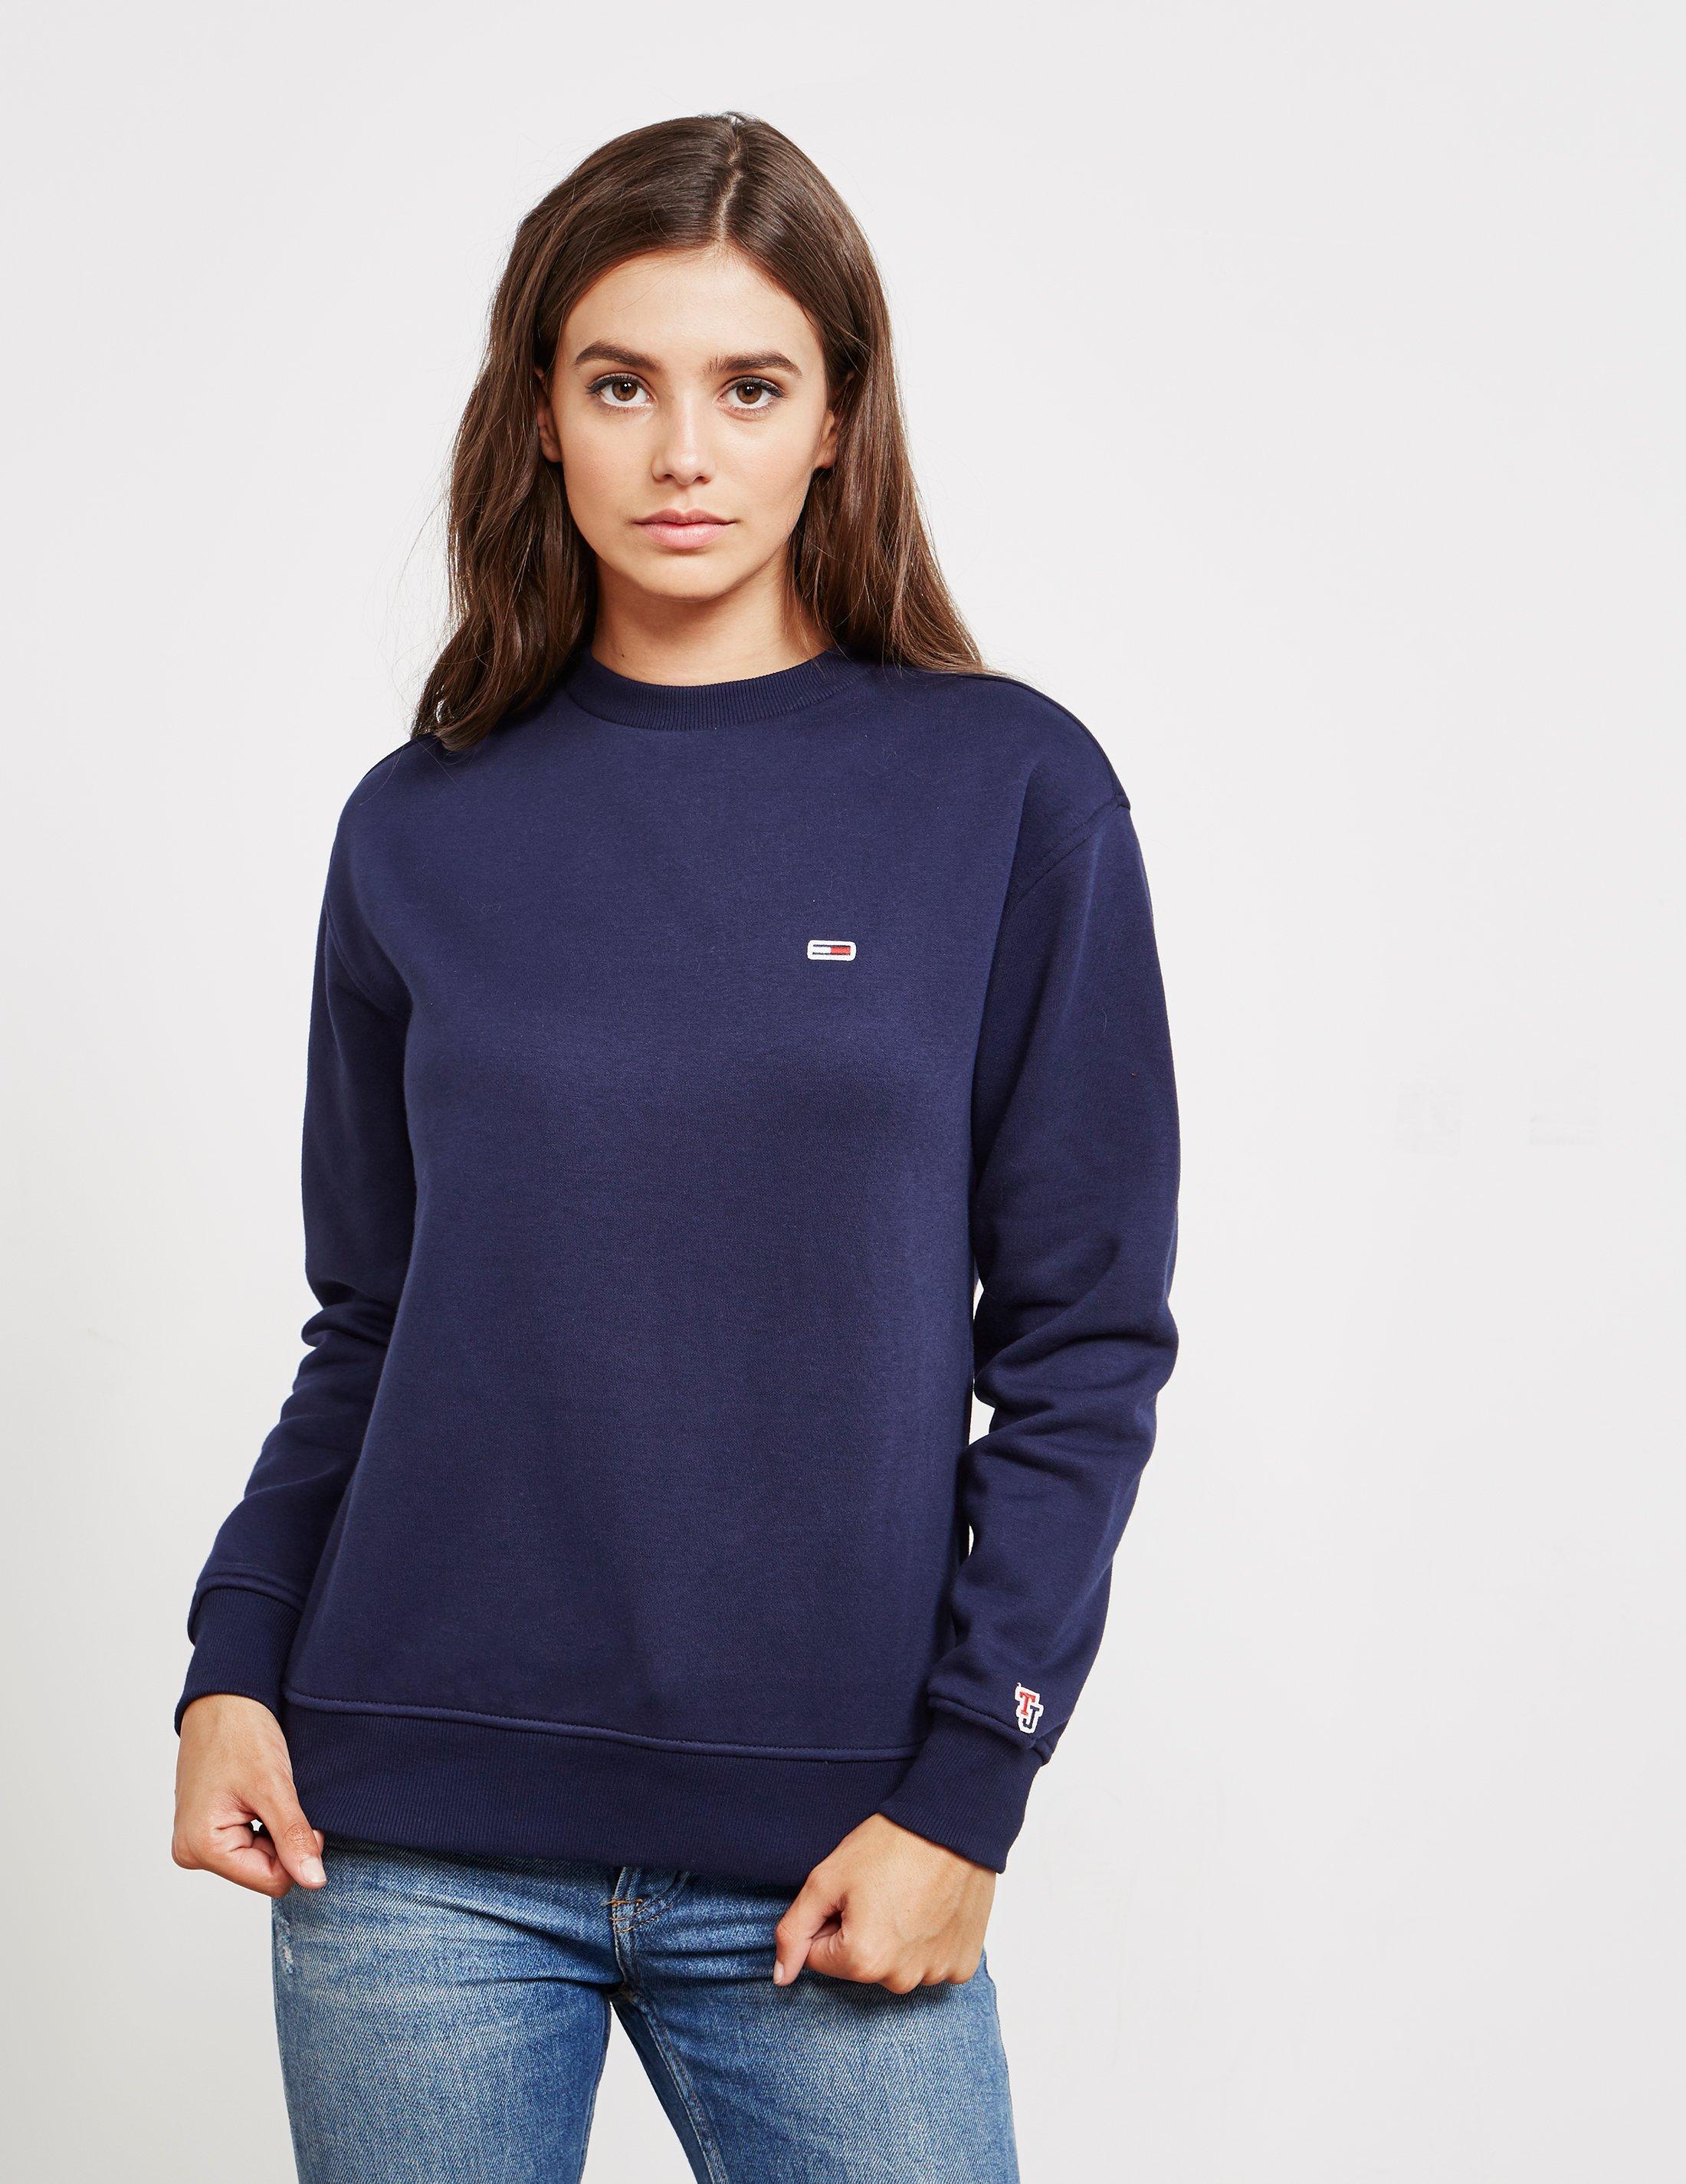 Tommy Hilfiger Navy Sweatshirt Womens United Kingdom, SAVE 53% - mpgc.net